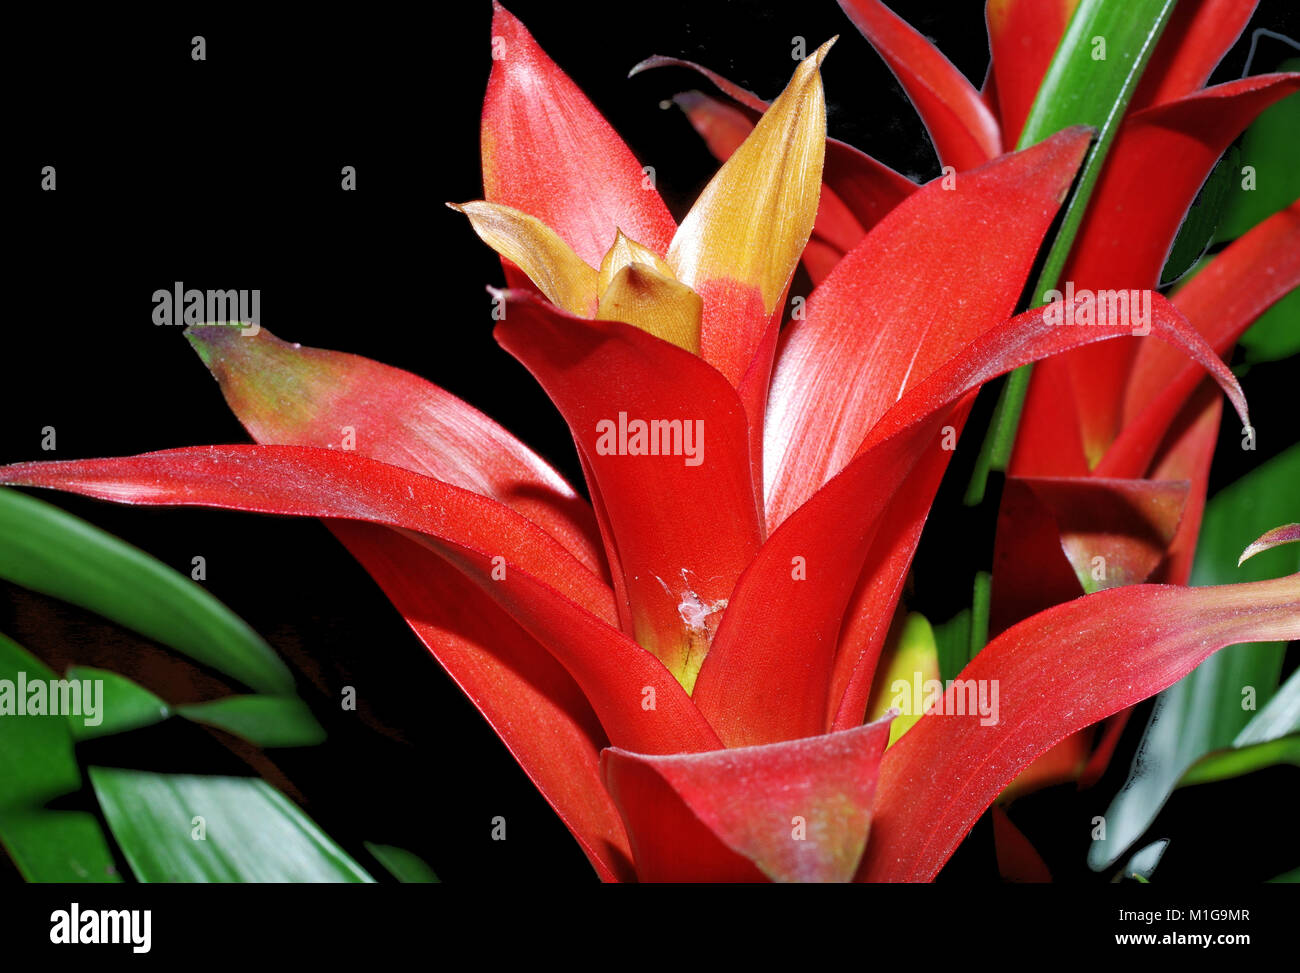 Bromelia flower close-up Stock Photo